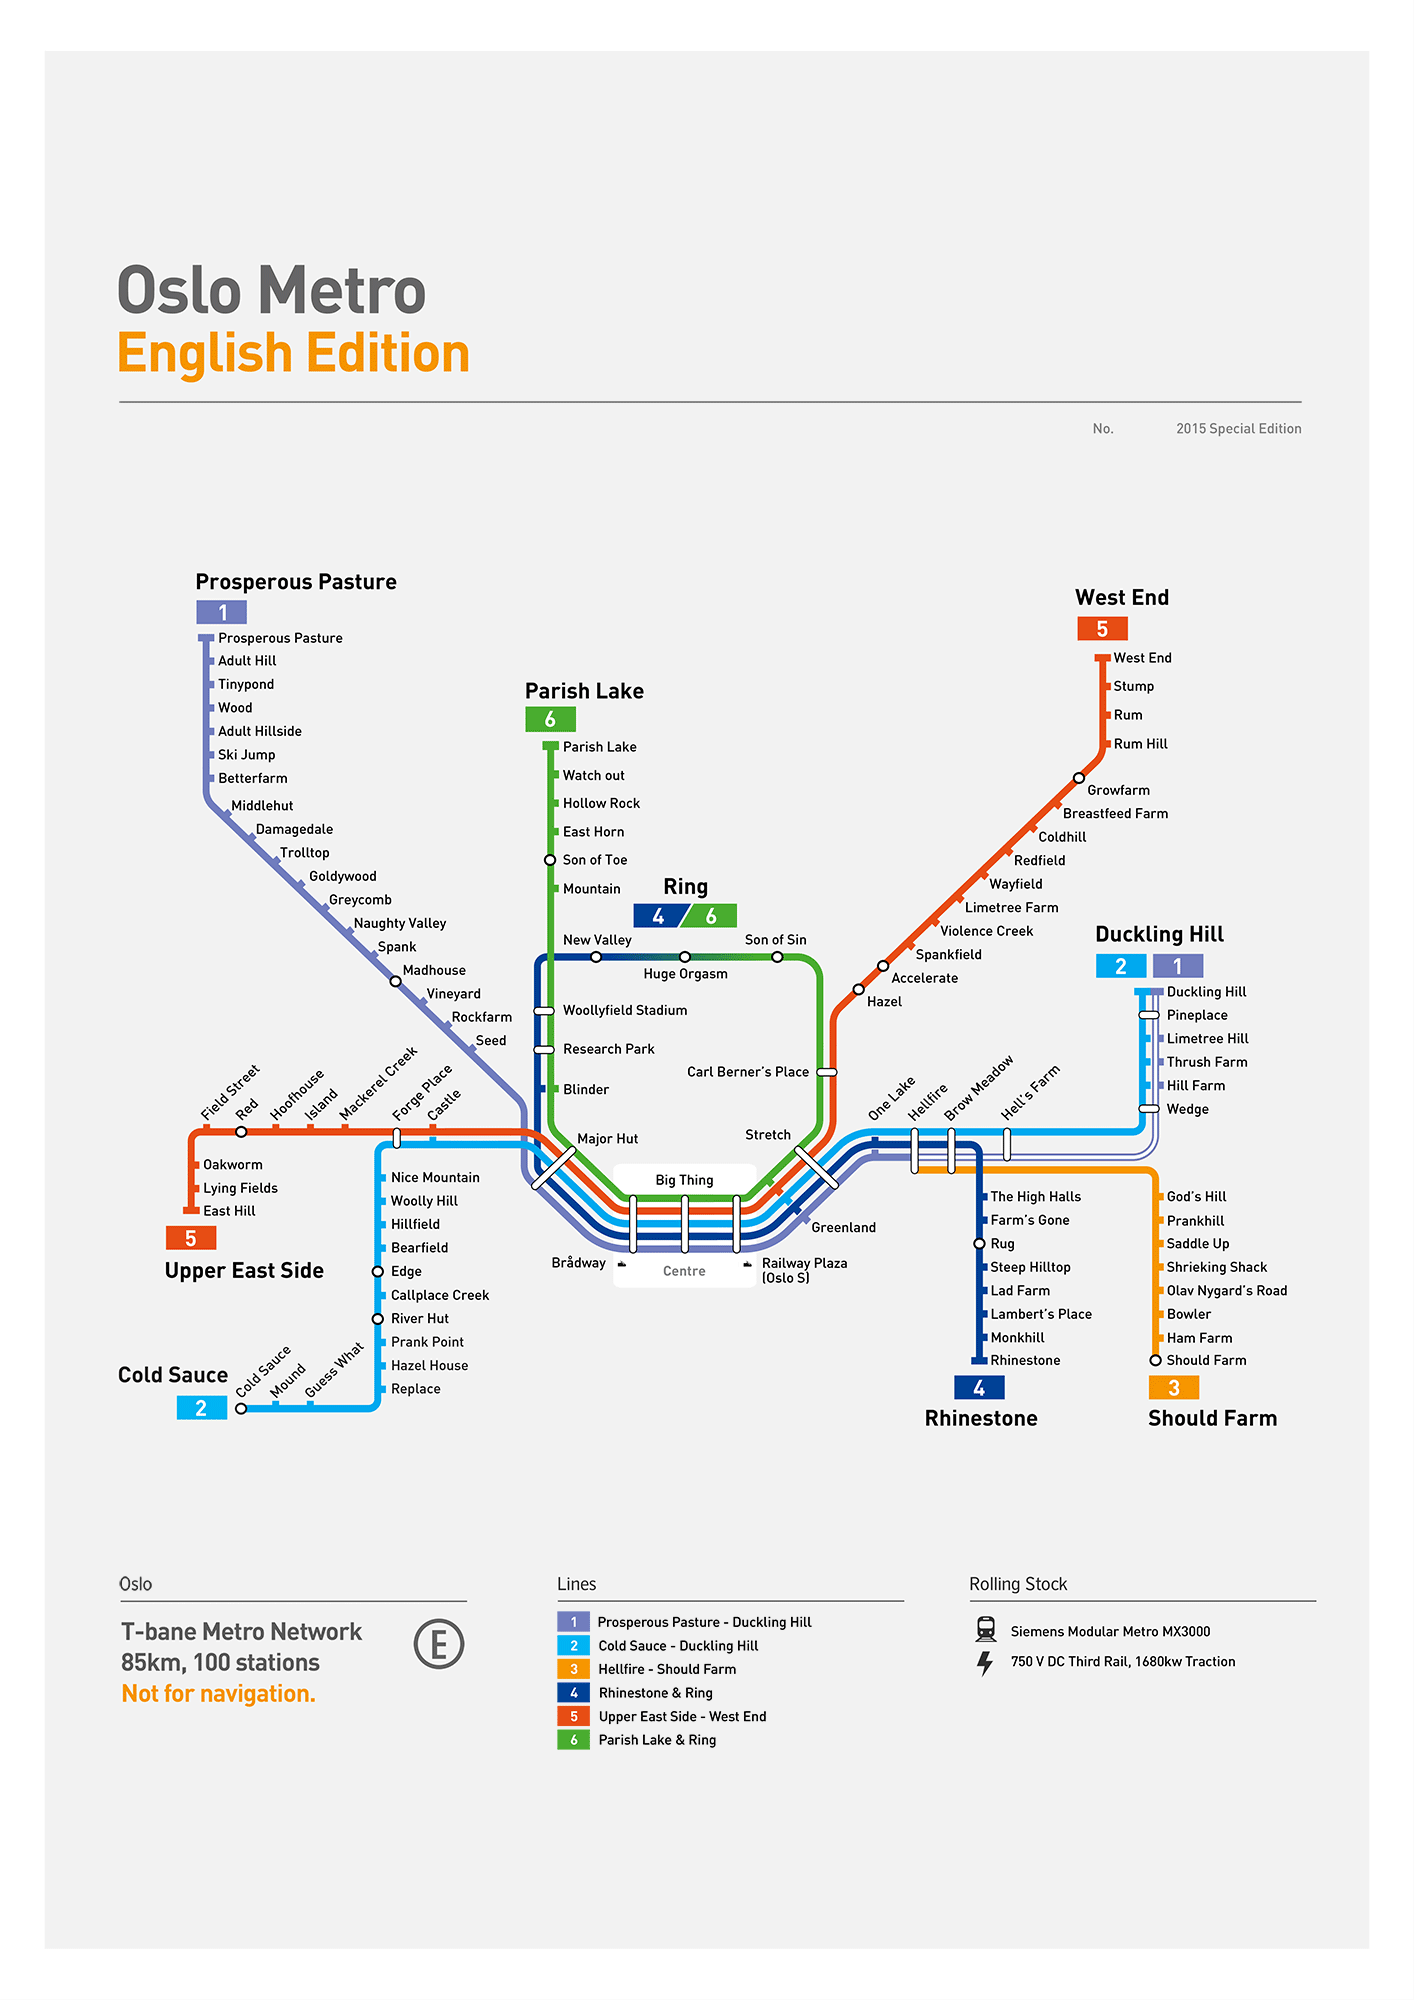 Oslo metro map translated into English